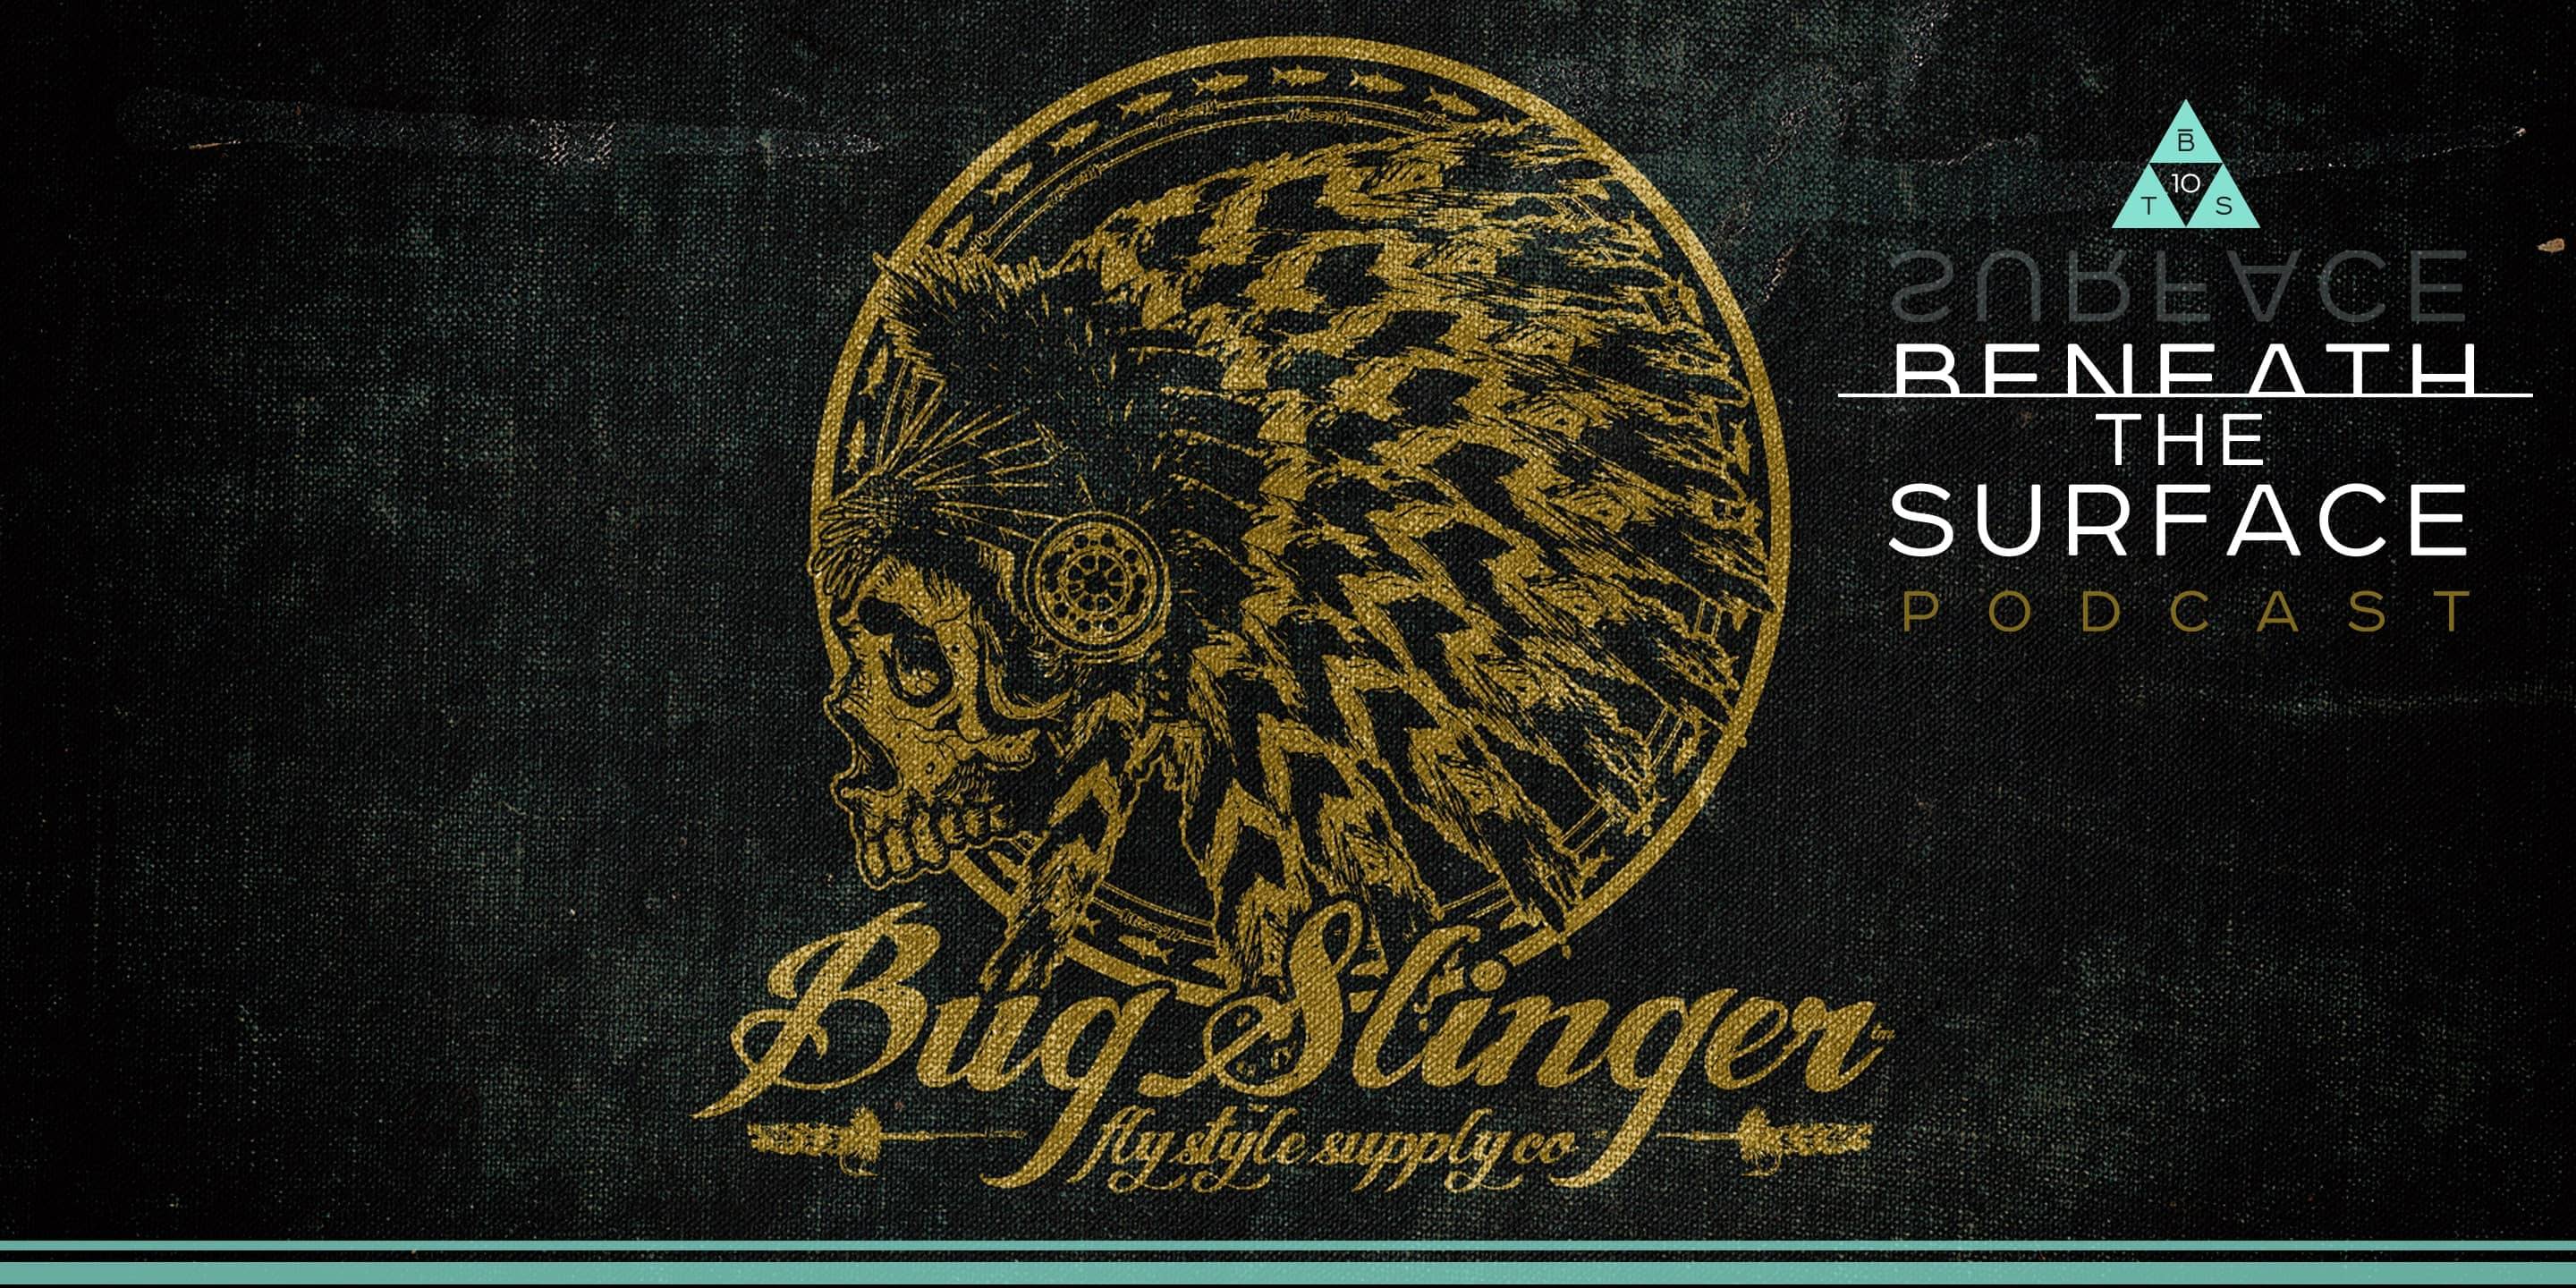 Beneath the Surface: Bug Slinger